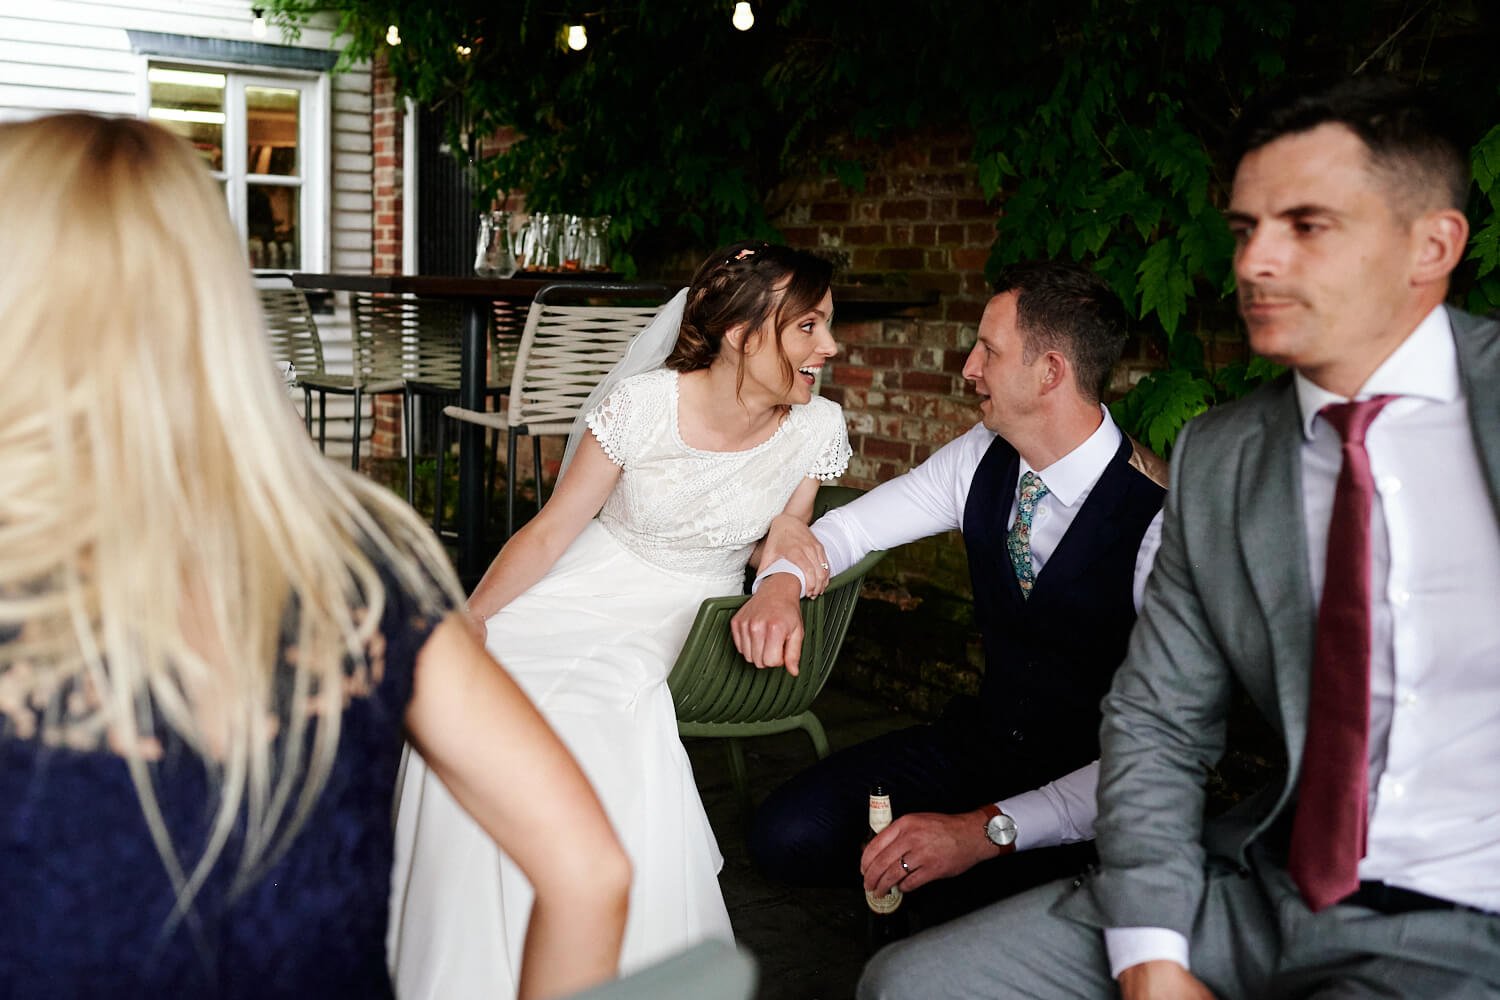 Wedding Photographer, Surrey | Leanne and Oli’s Farnham Wedding 28